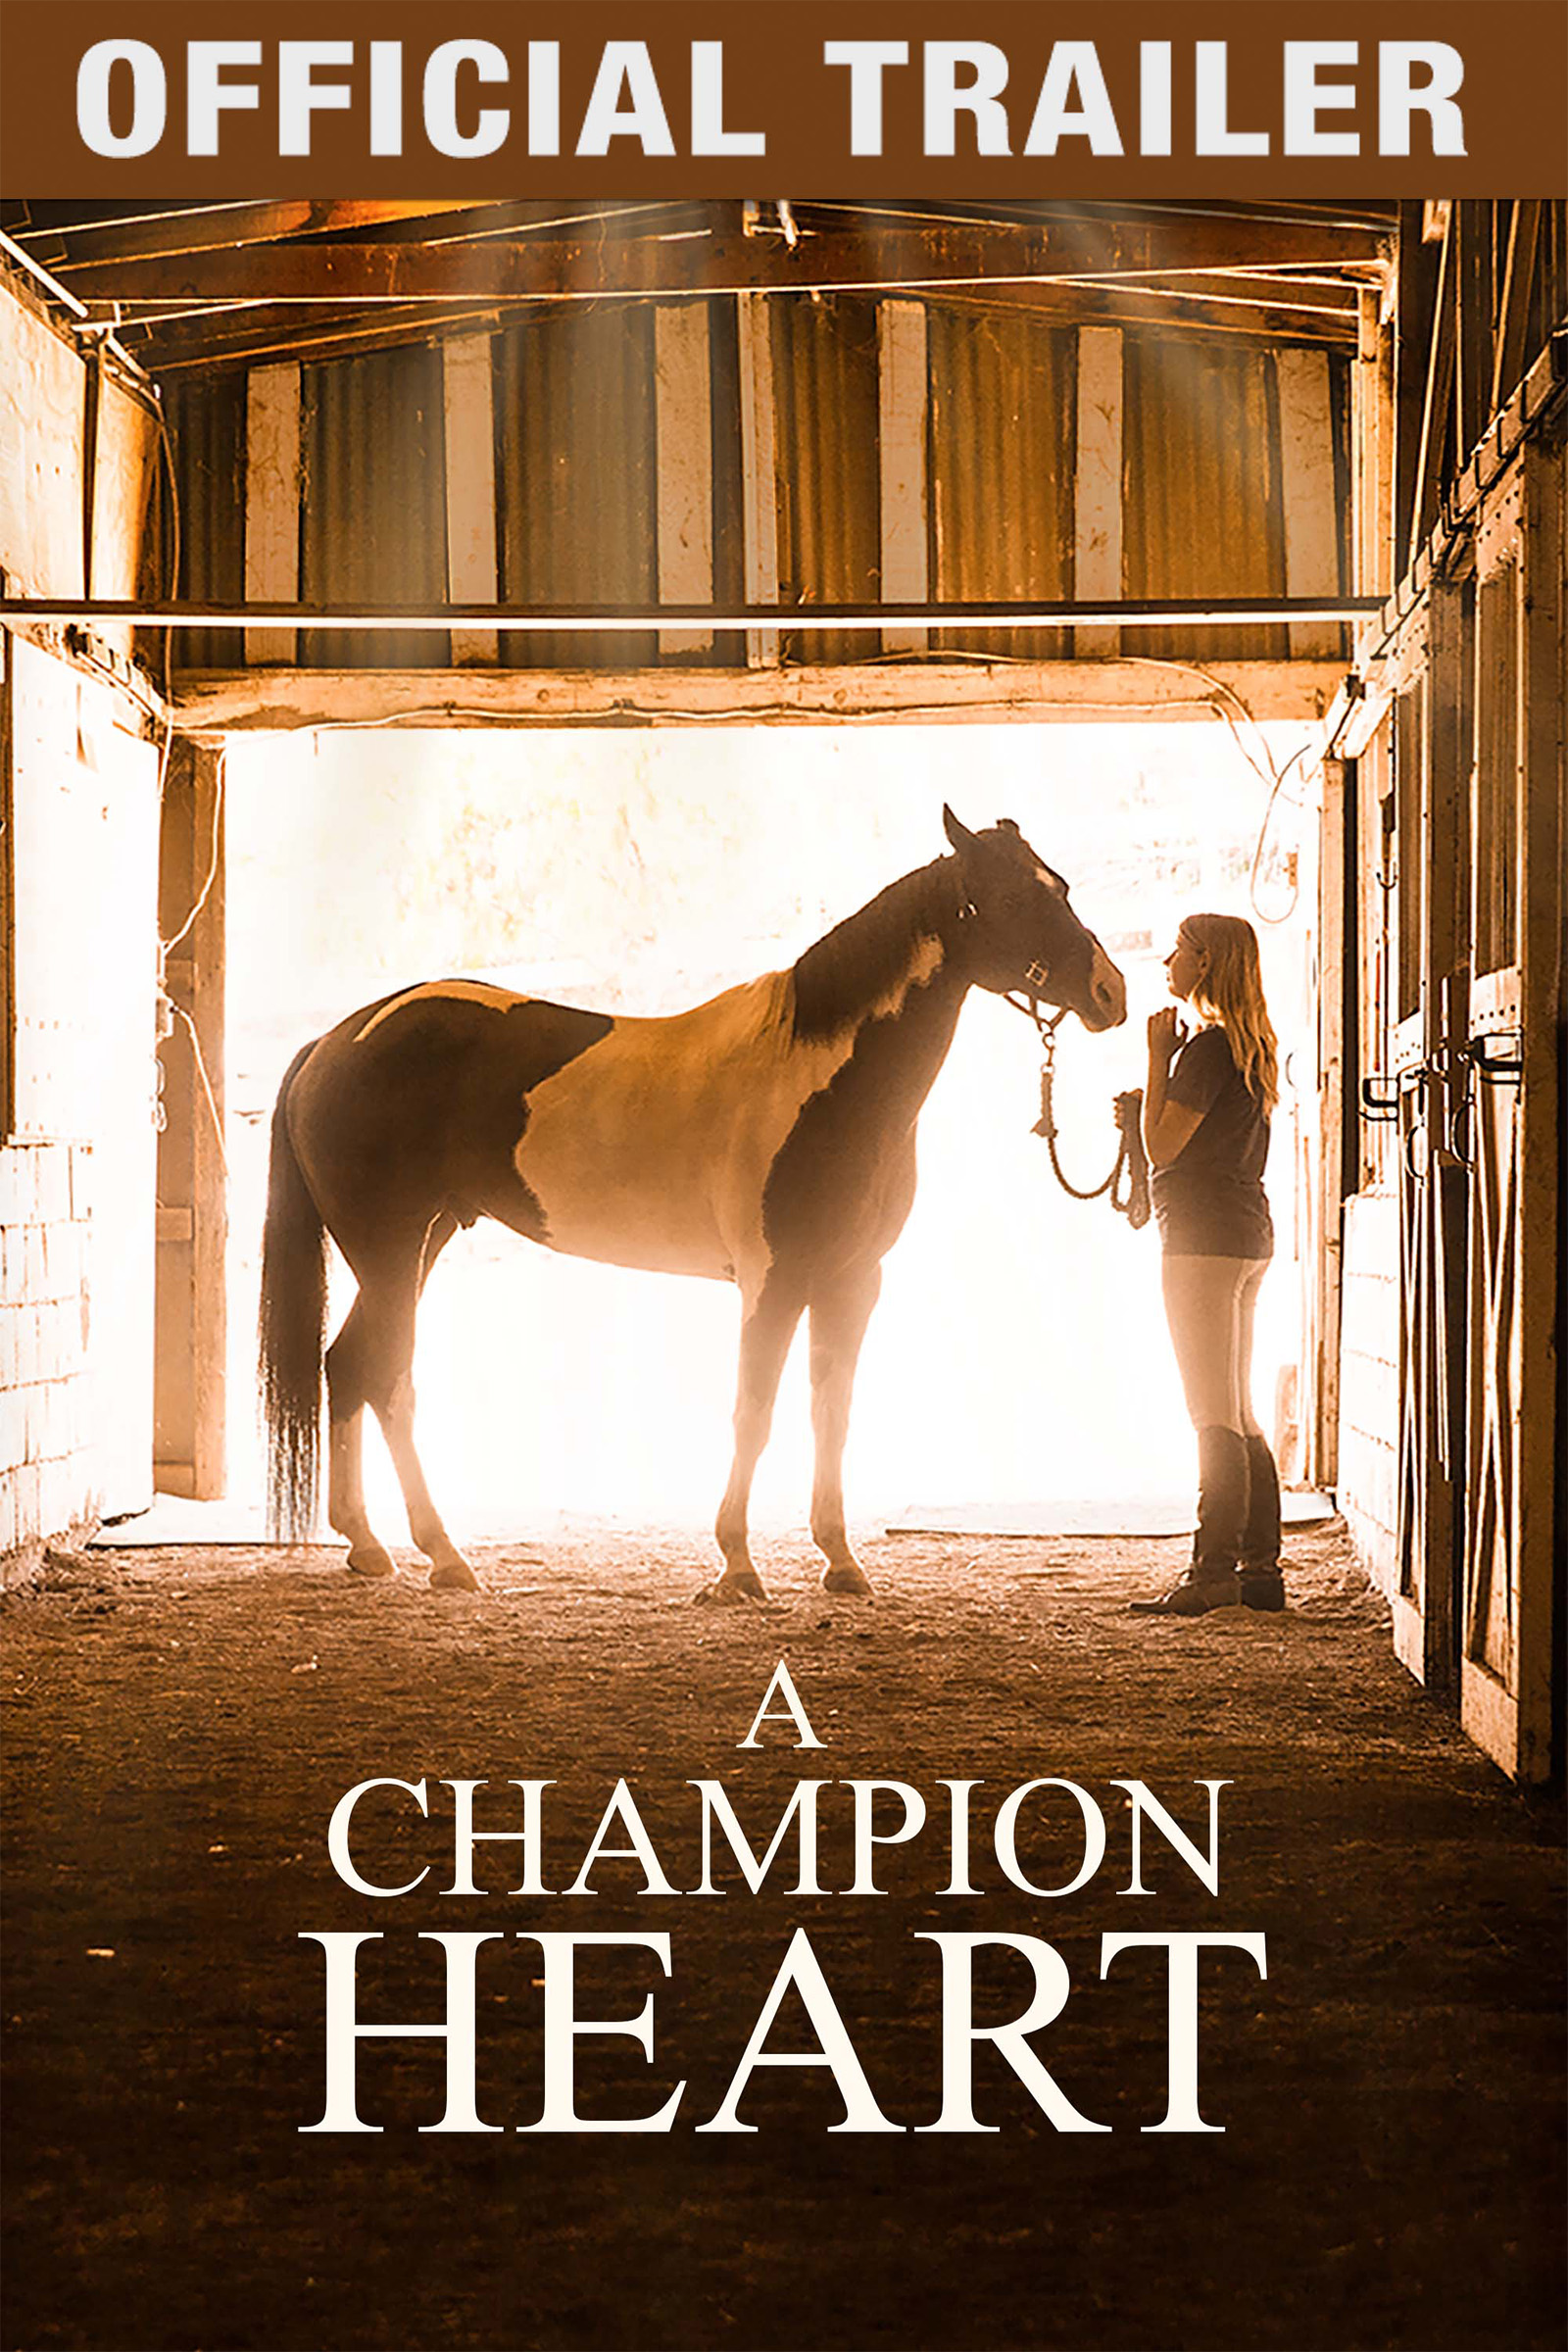 A Champion Heart: Trailer